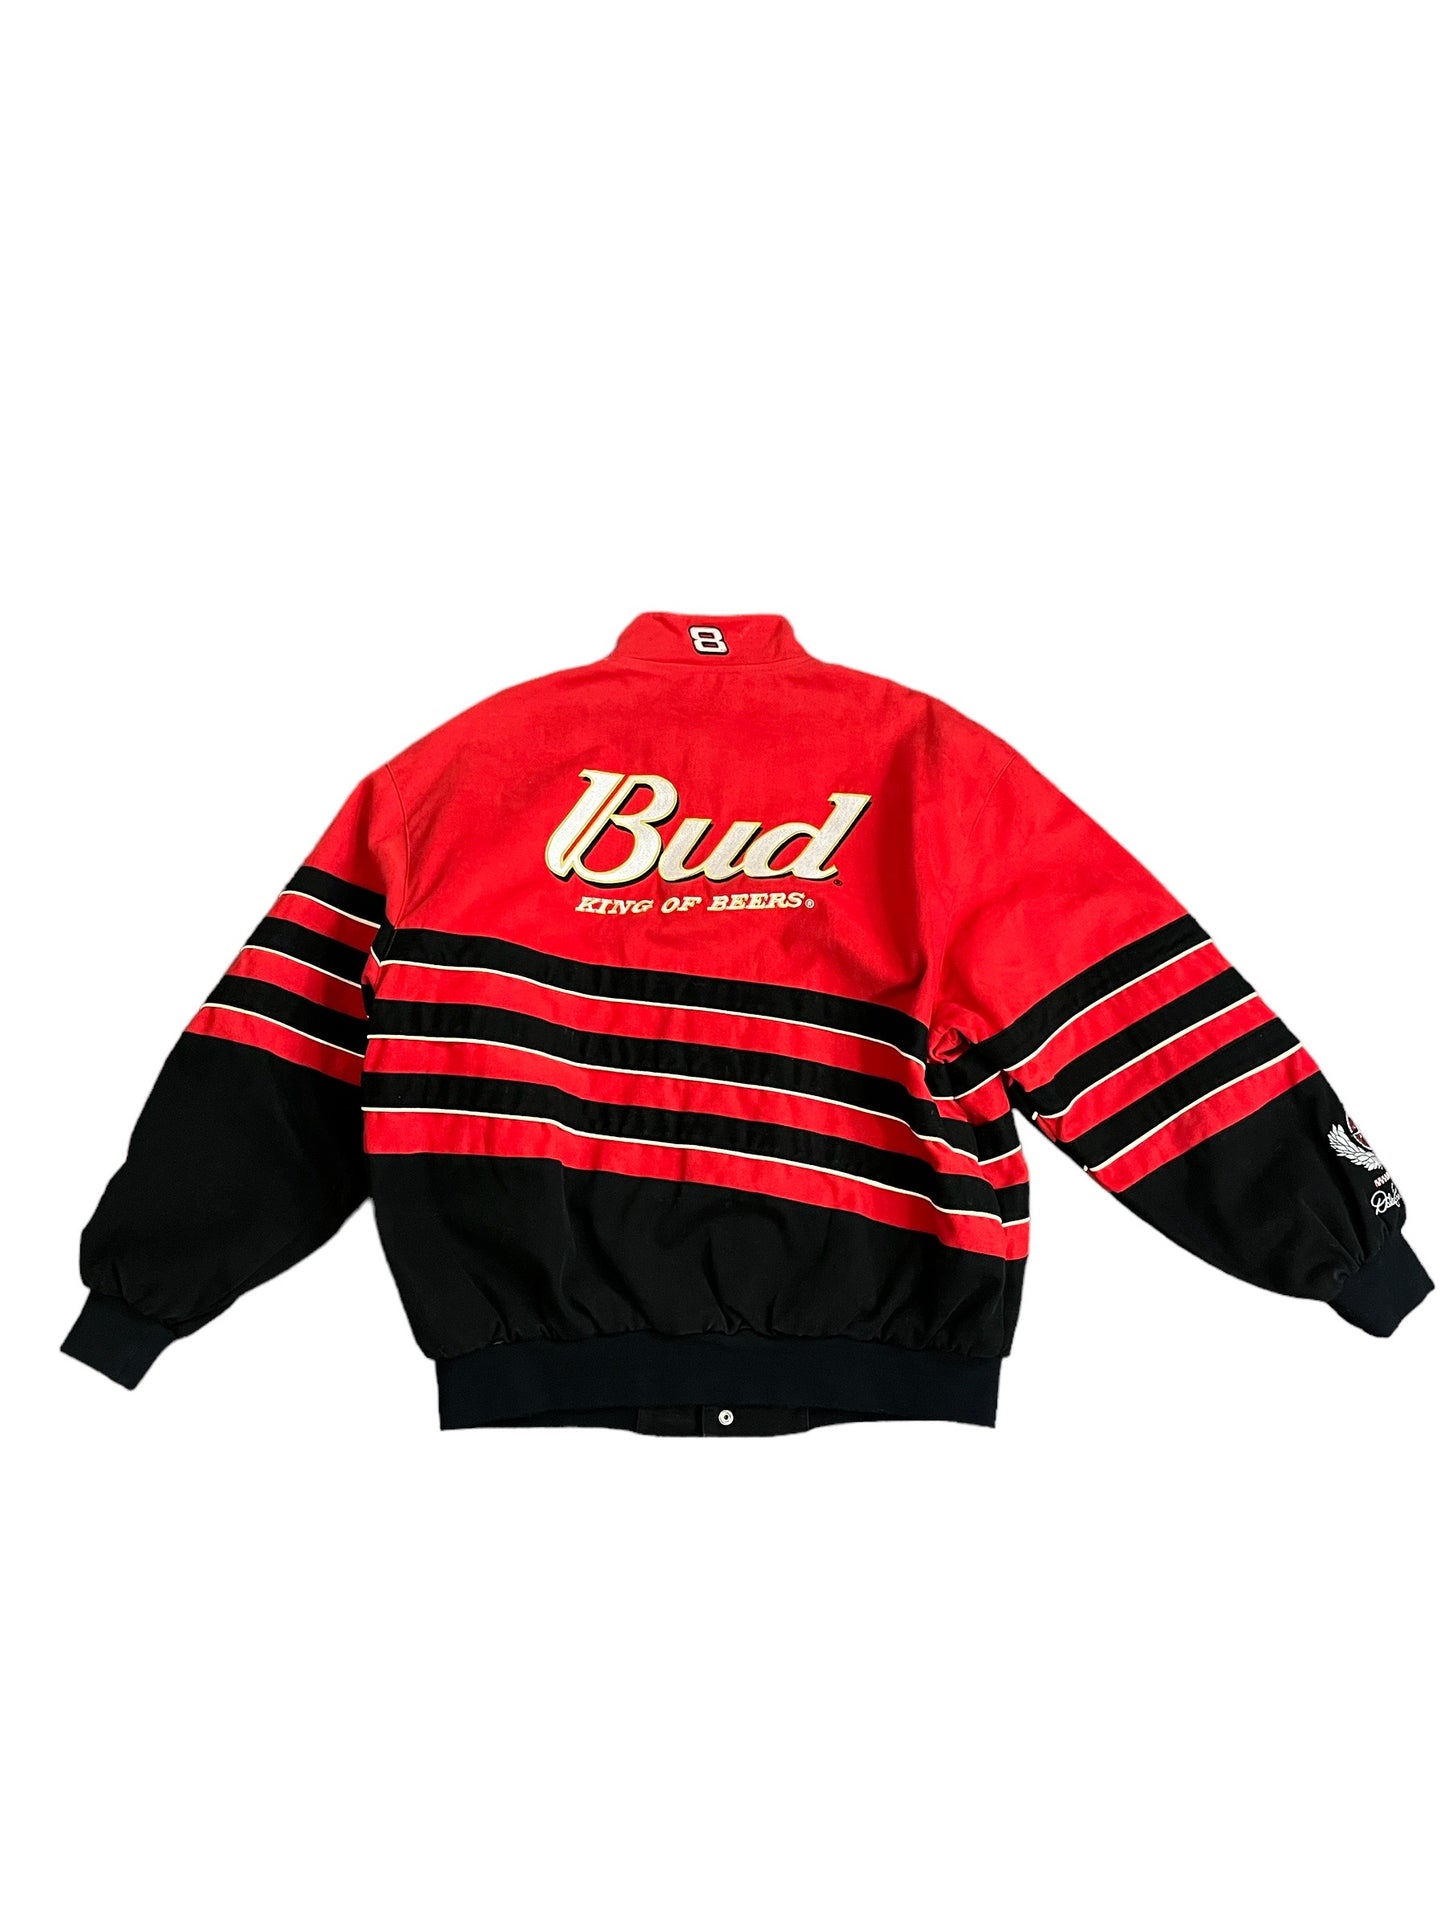 Vintage Nascar Budweiser "King Of Bud" Racing Jacket